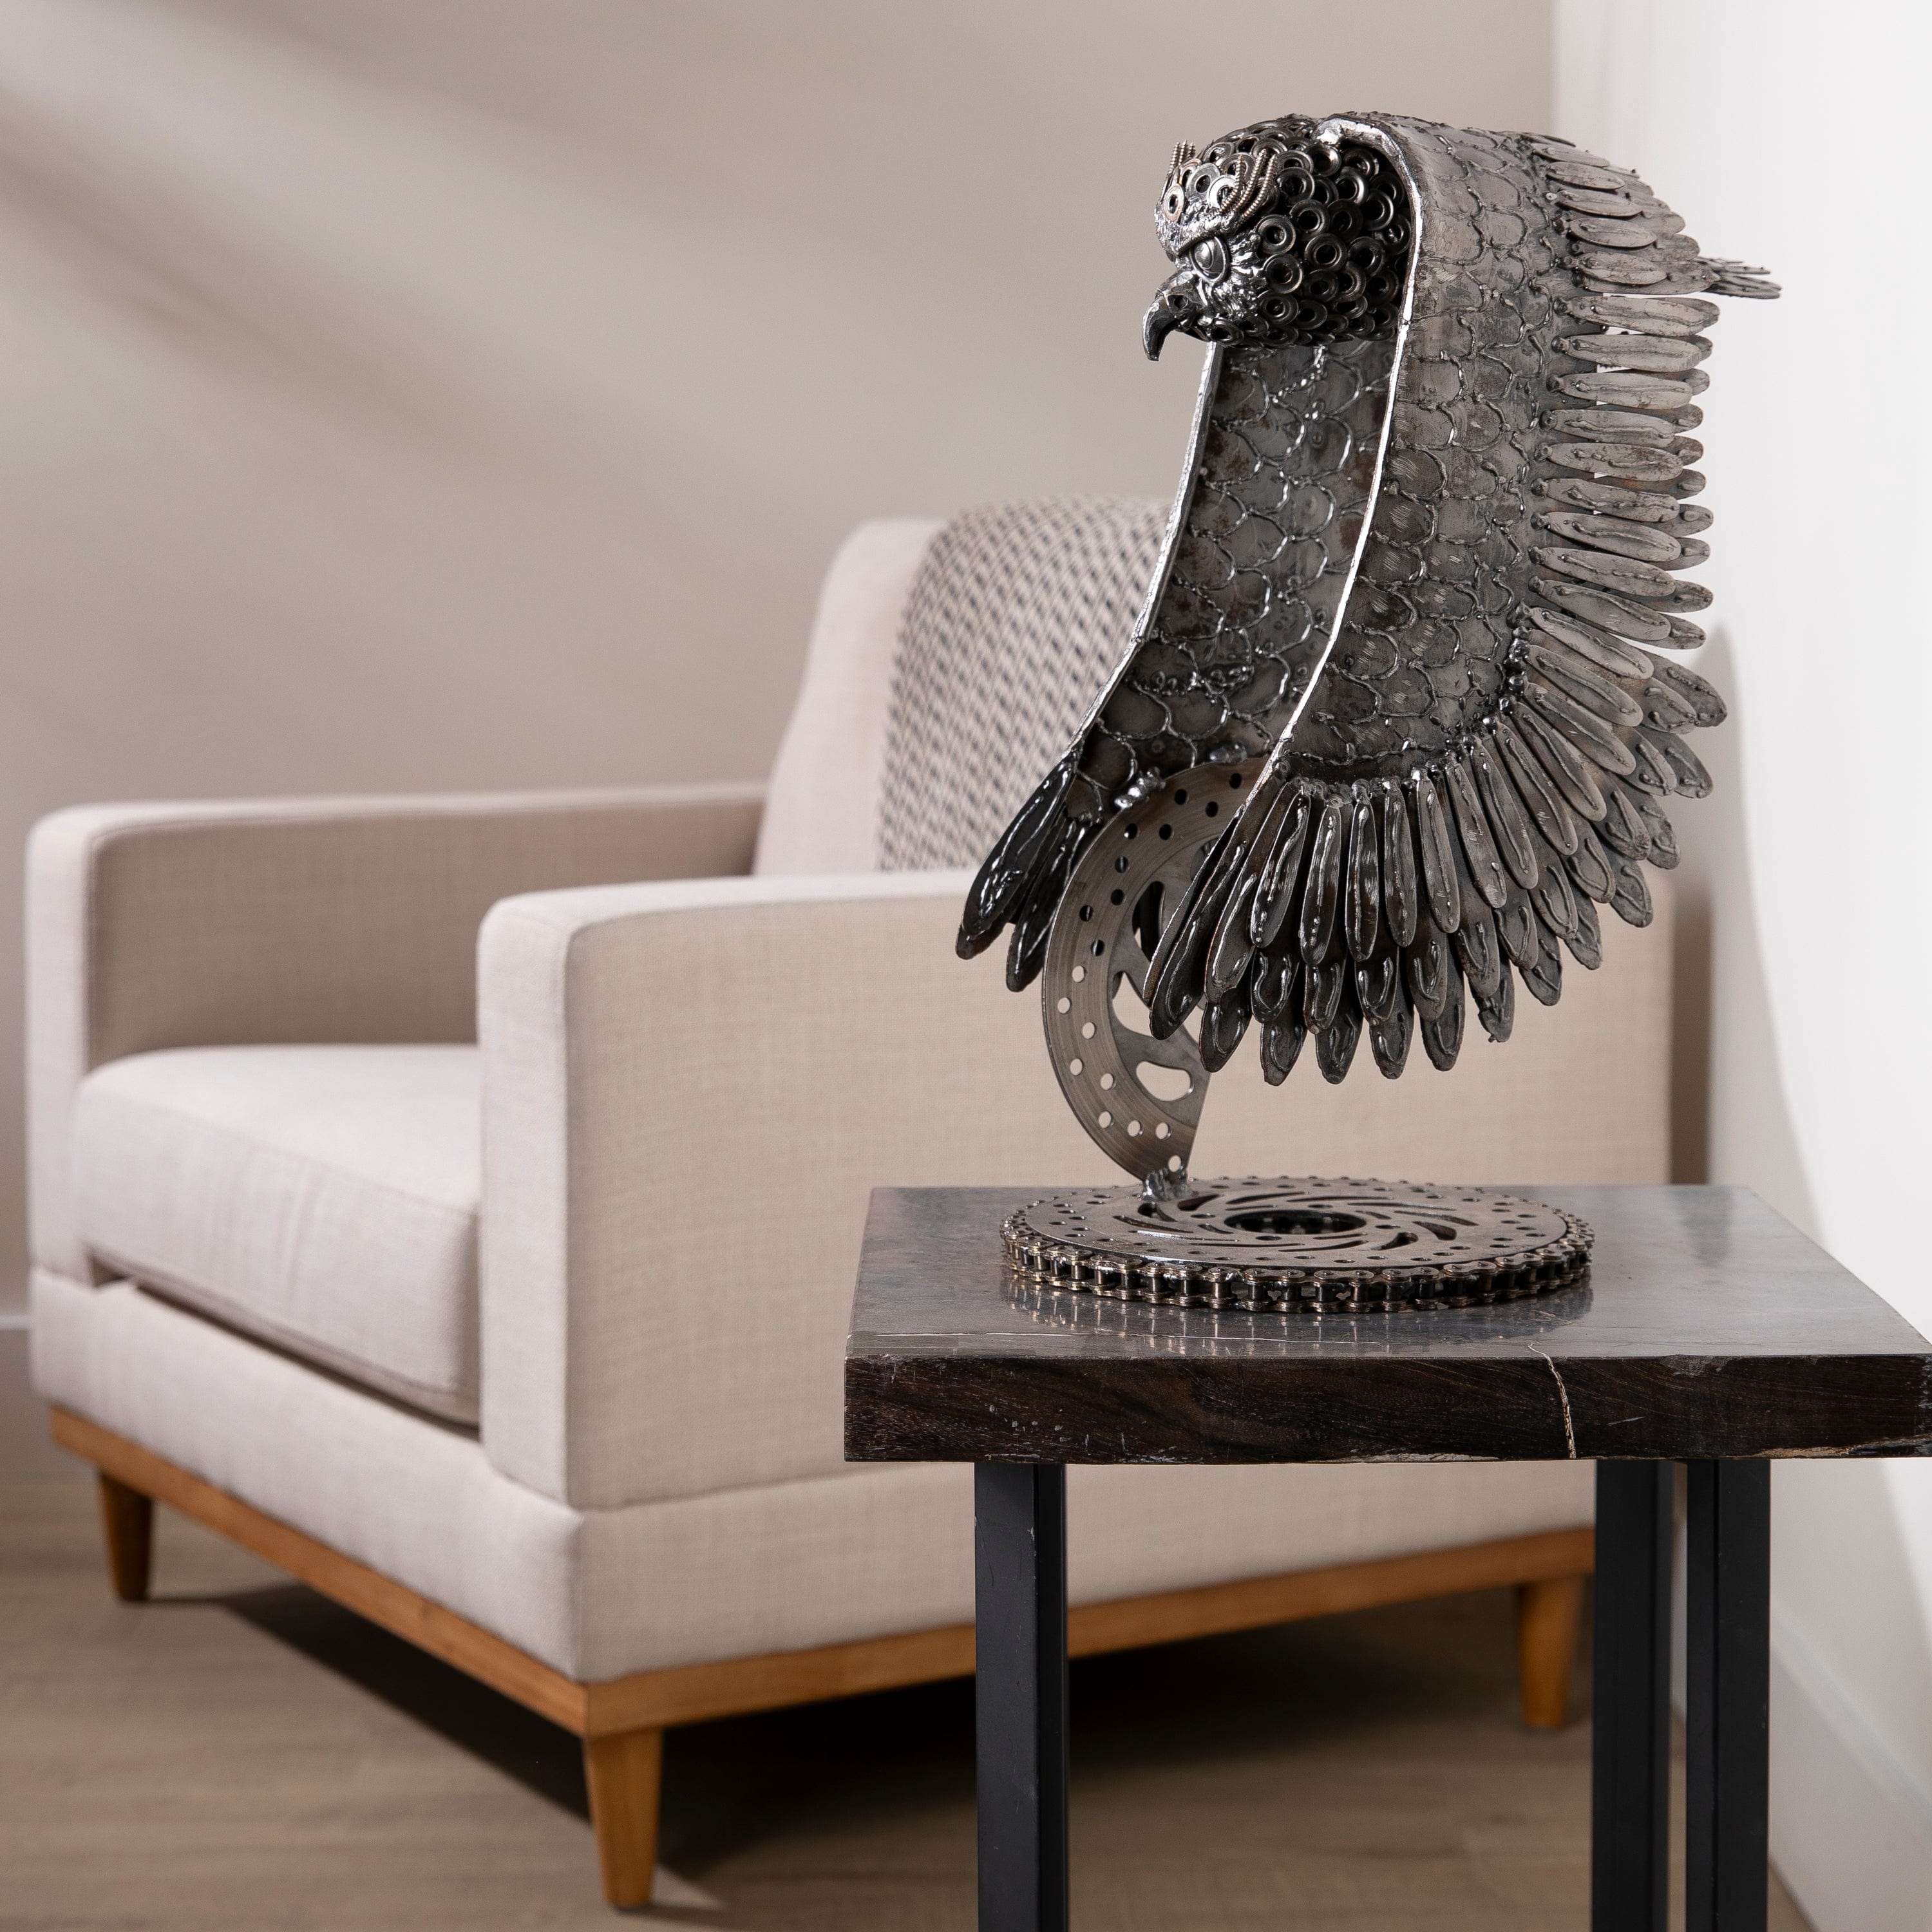 KALIFANO Recycled Metal Art 18" Owl Inspired Recycled Metal Art Sculpture RMS-OWL30x45-PK